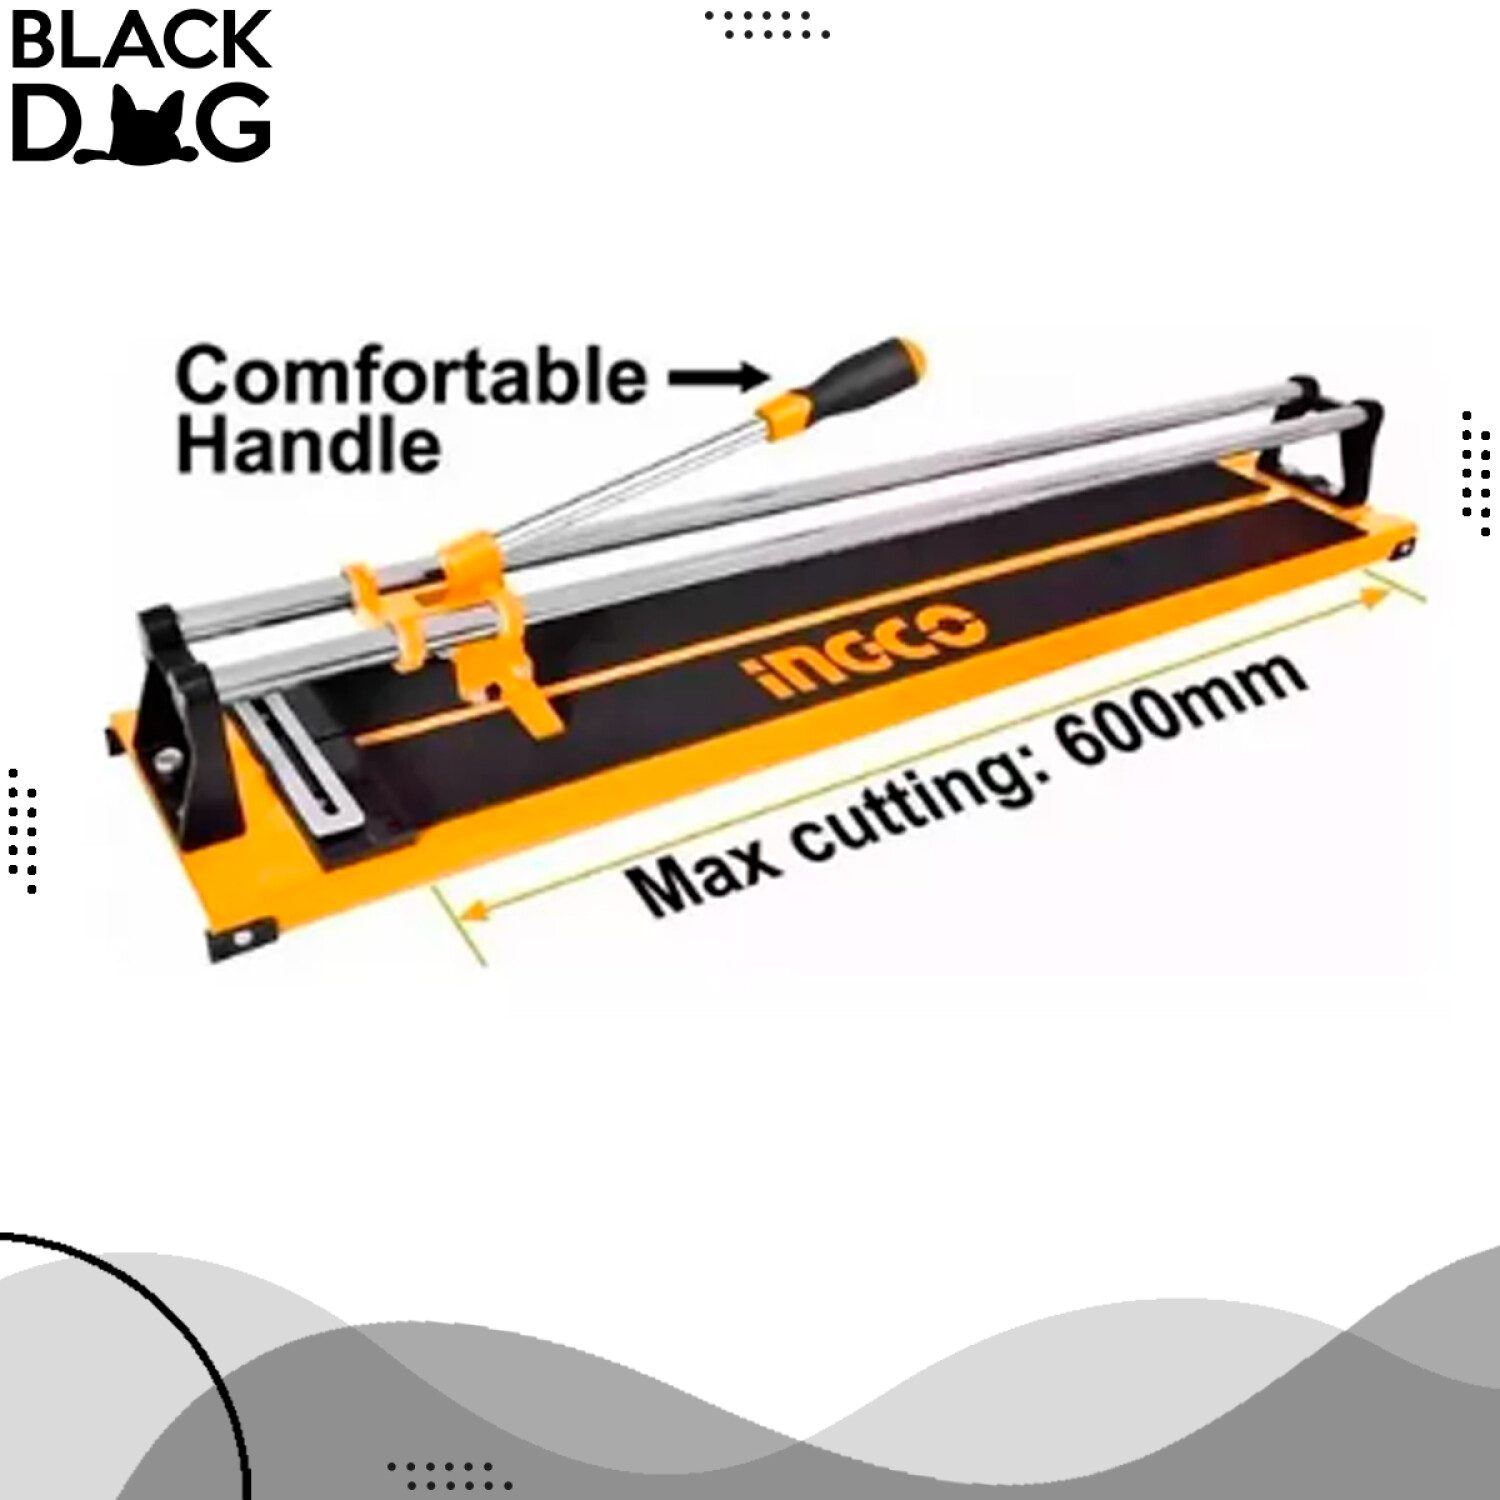 Mini Torno A Bateria 12v Incluida Cmgli12011 Ingco + Smartwatch — Black Dog